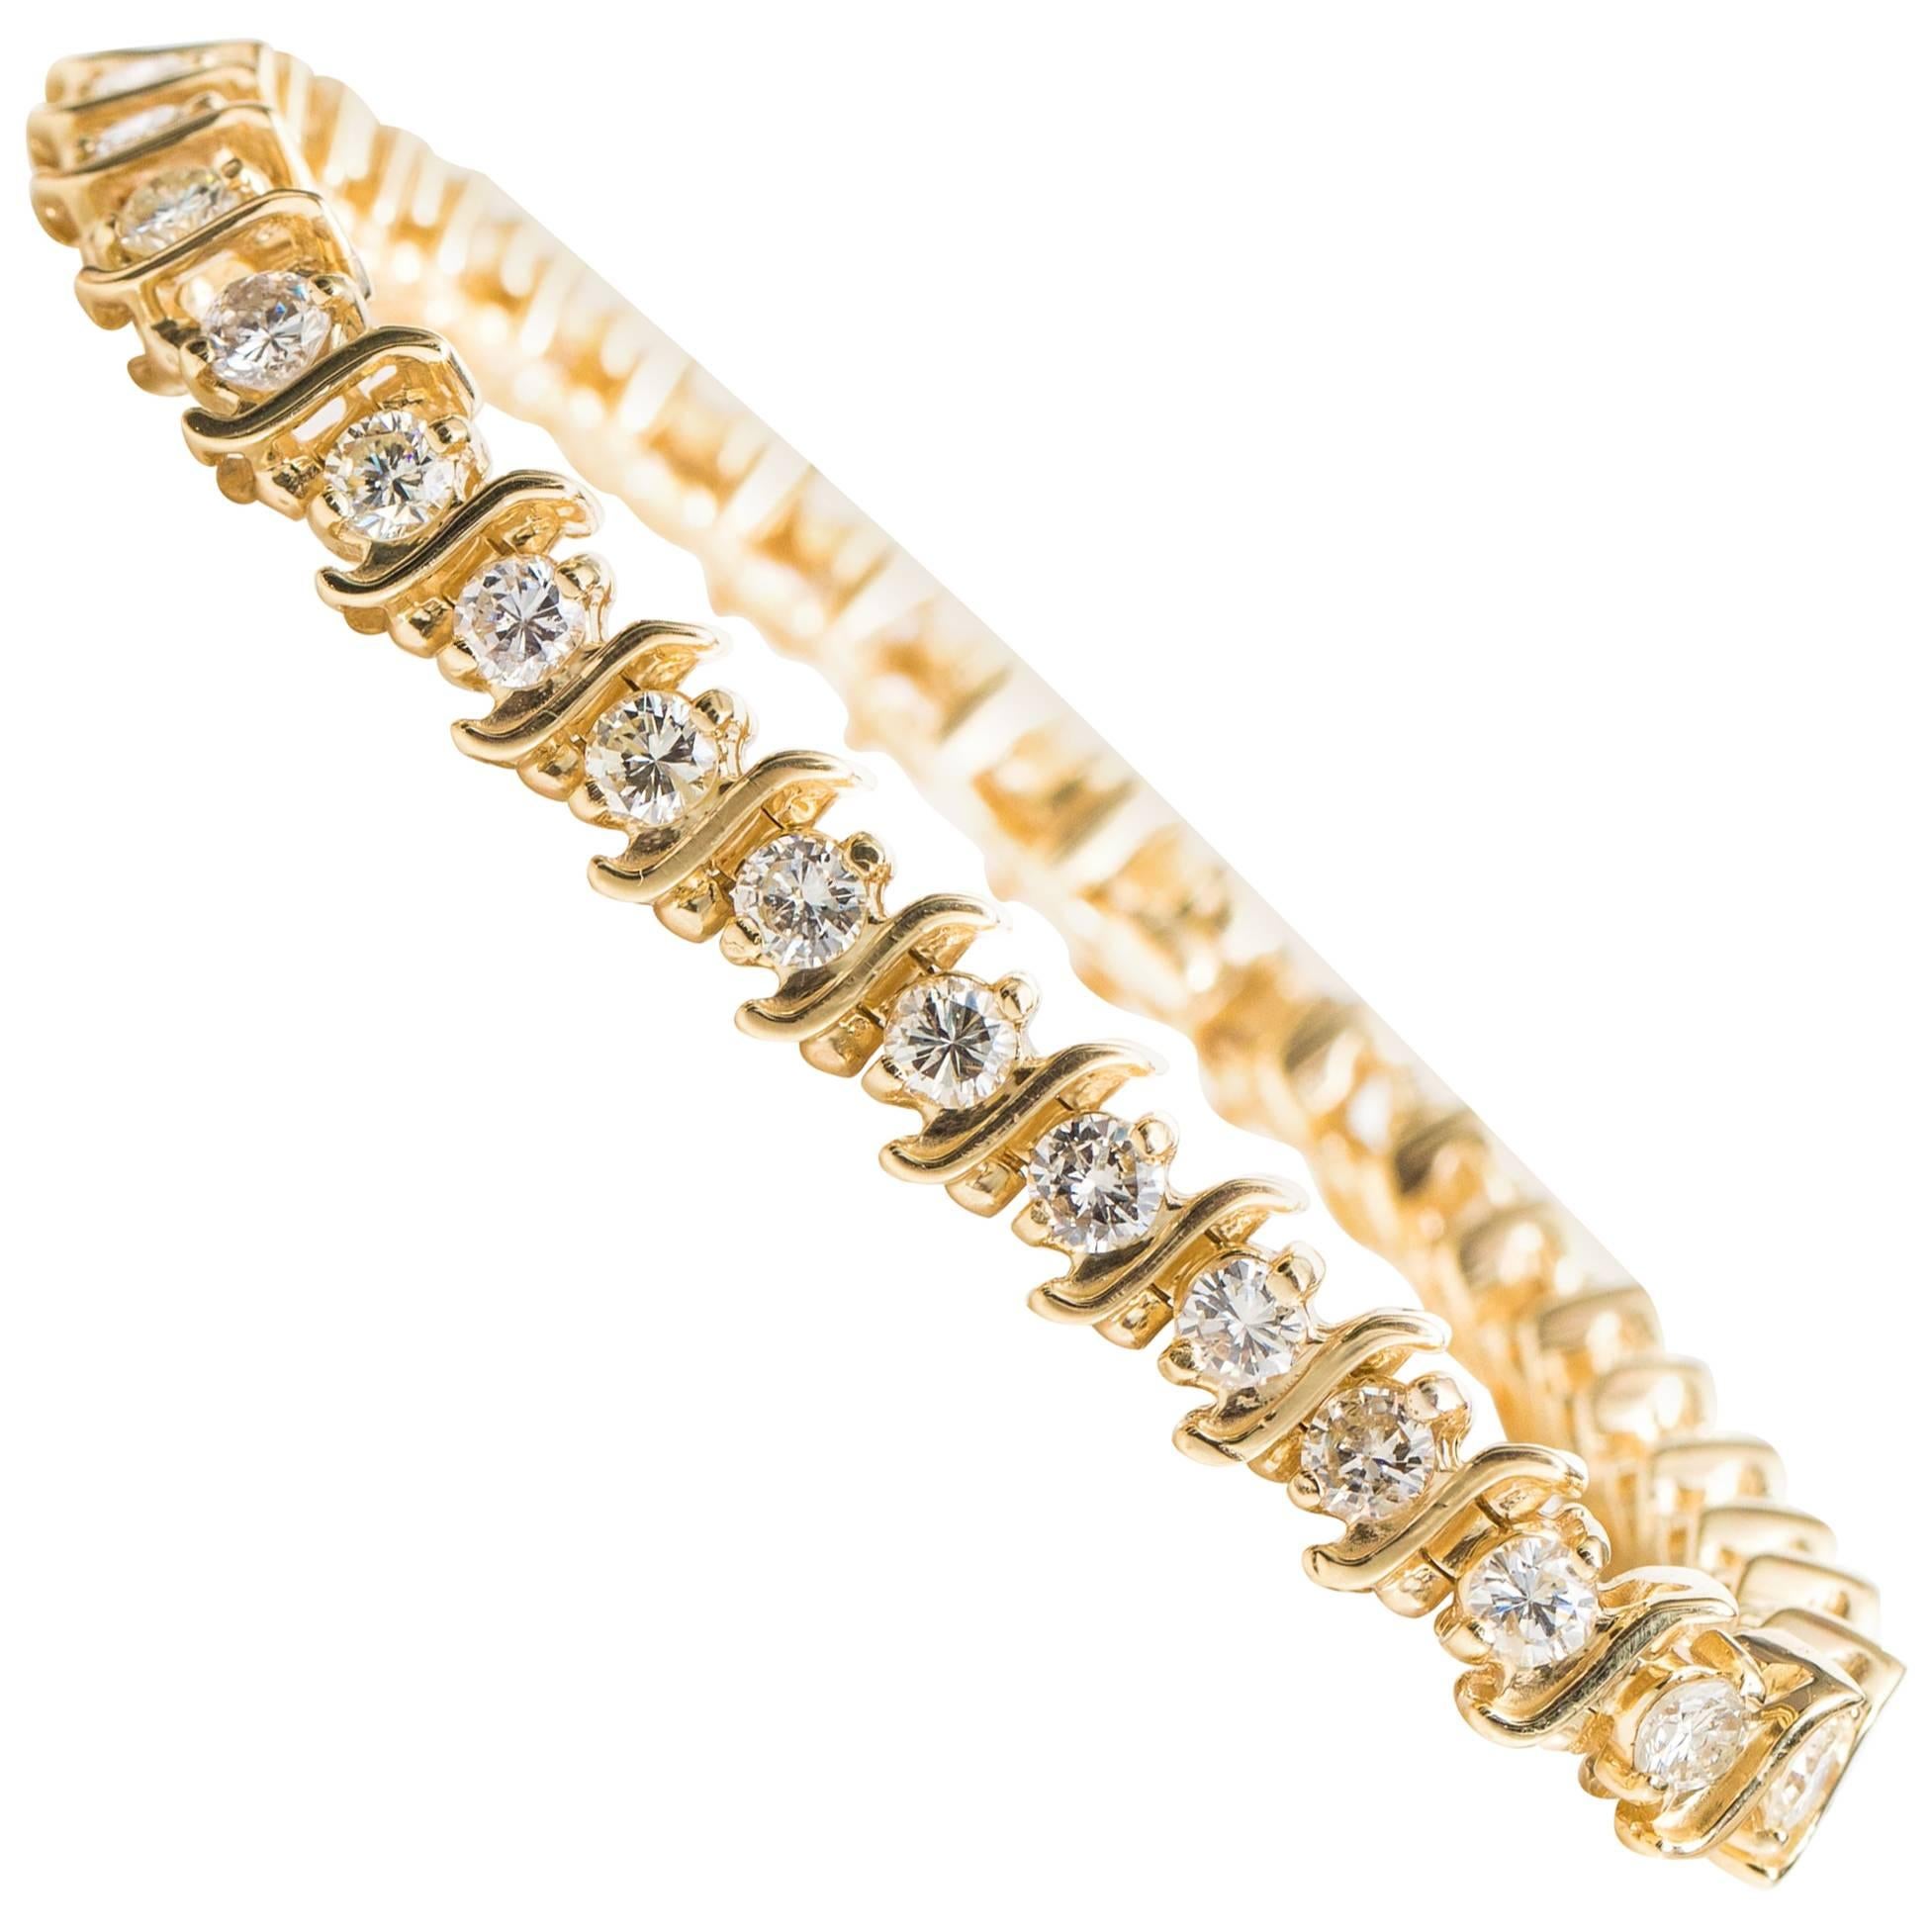 6 Carat Diamond and 14 Karat Gold S-Link Tennis Bracelet